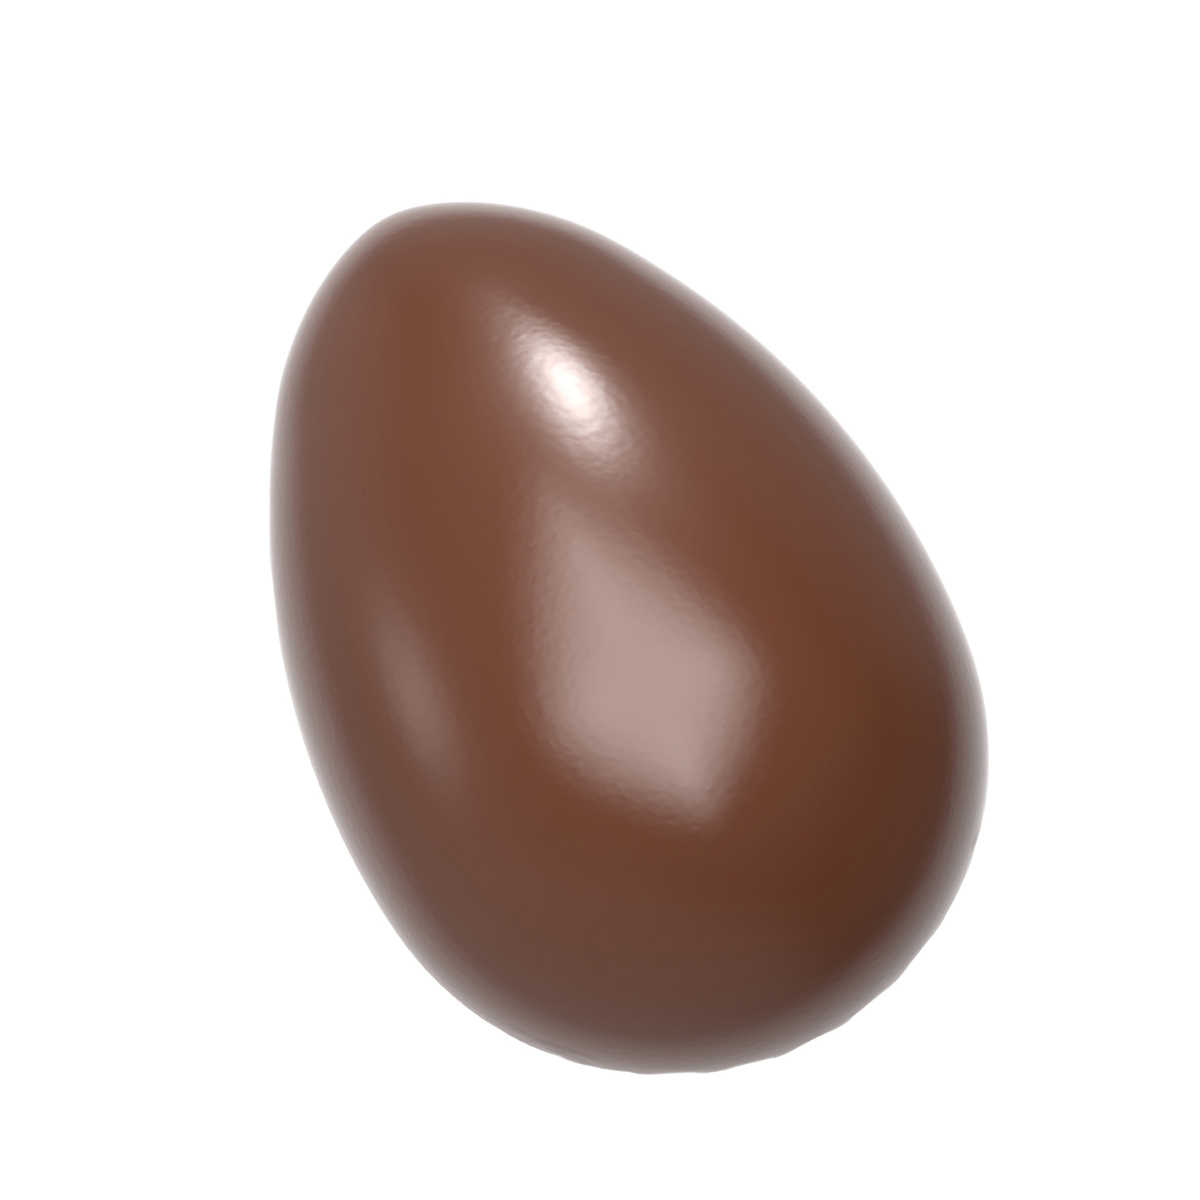 Professionel chokoladeform i polycarbonat - Smooth egg 3,3 cm CW1582